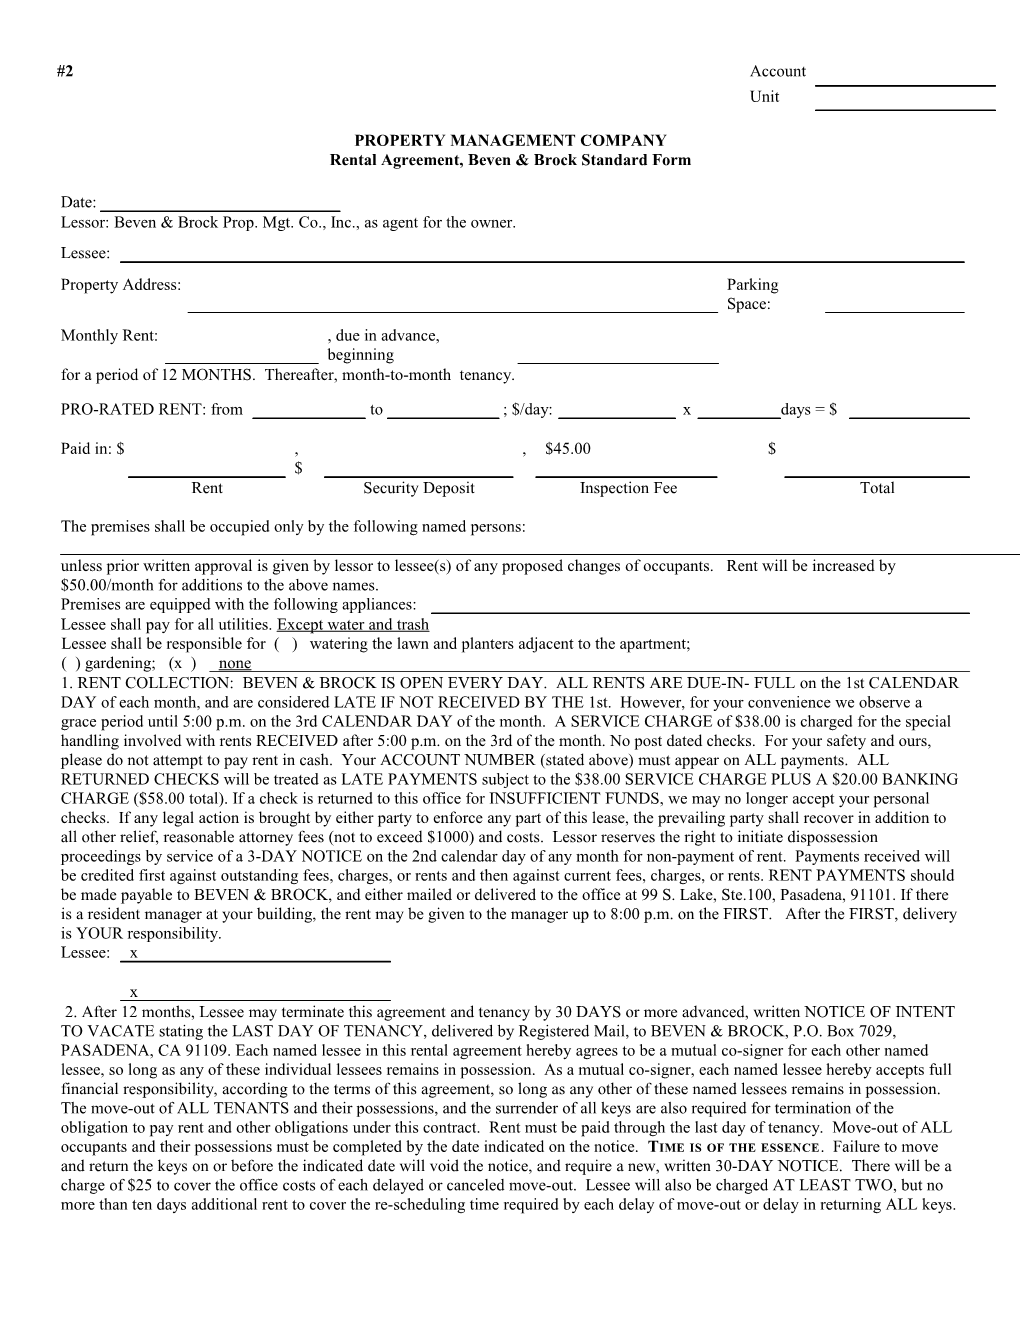 Rental Agreement, Beven & Brock Standard Form